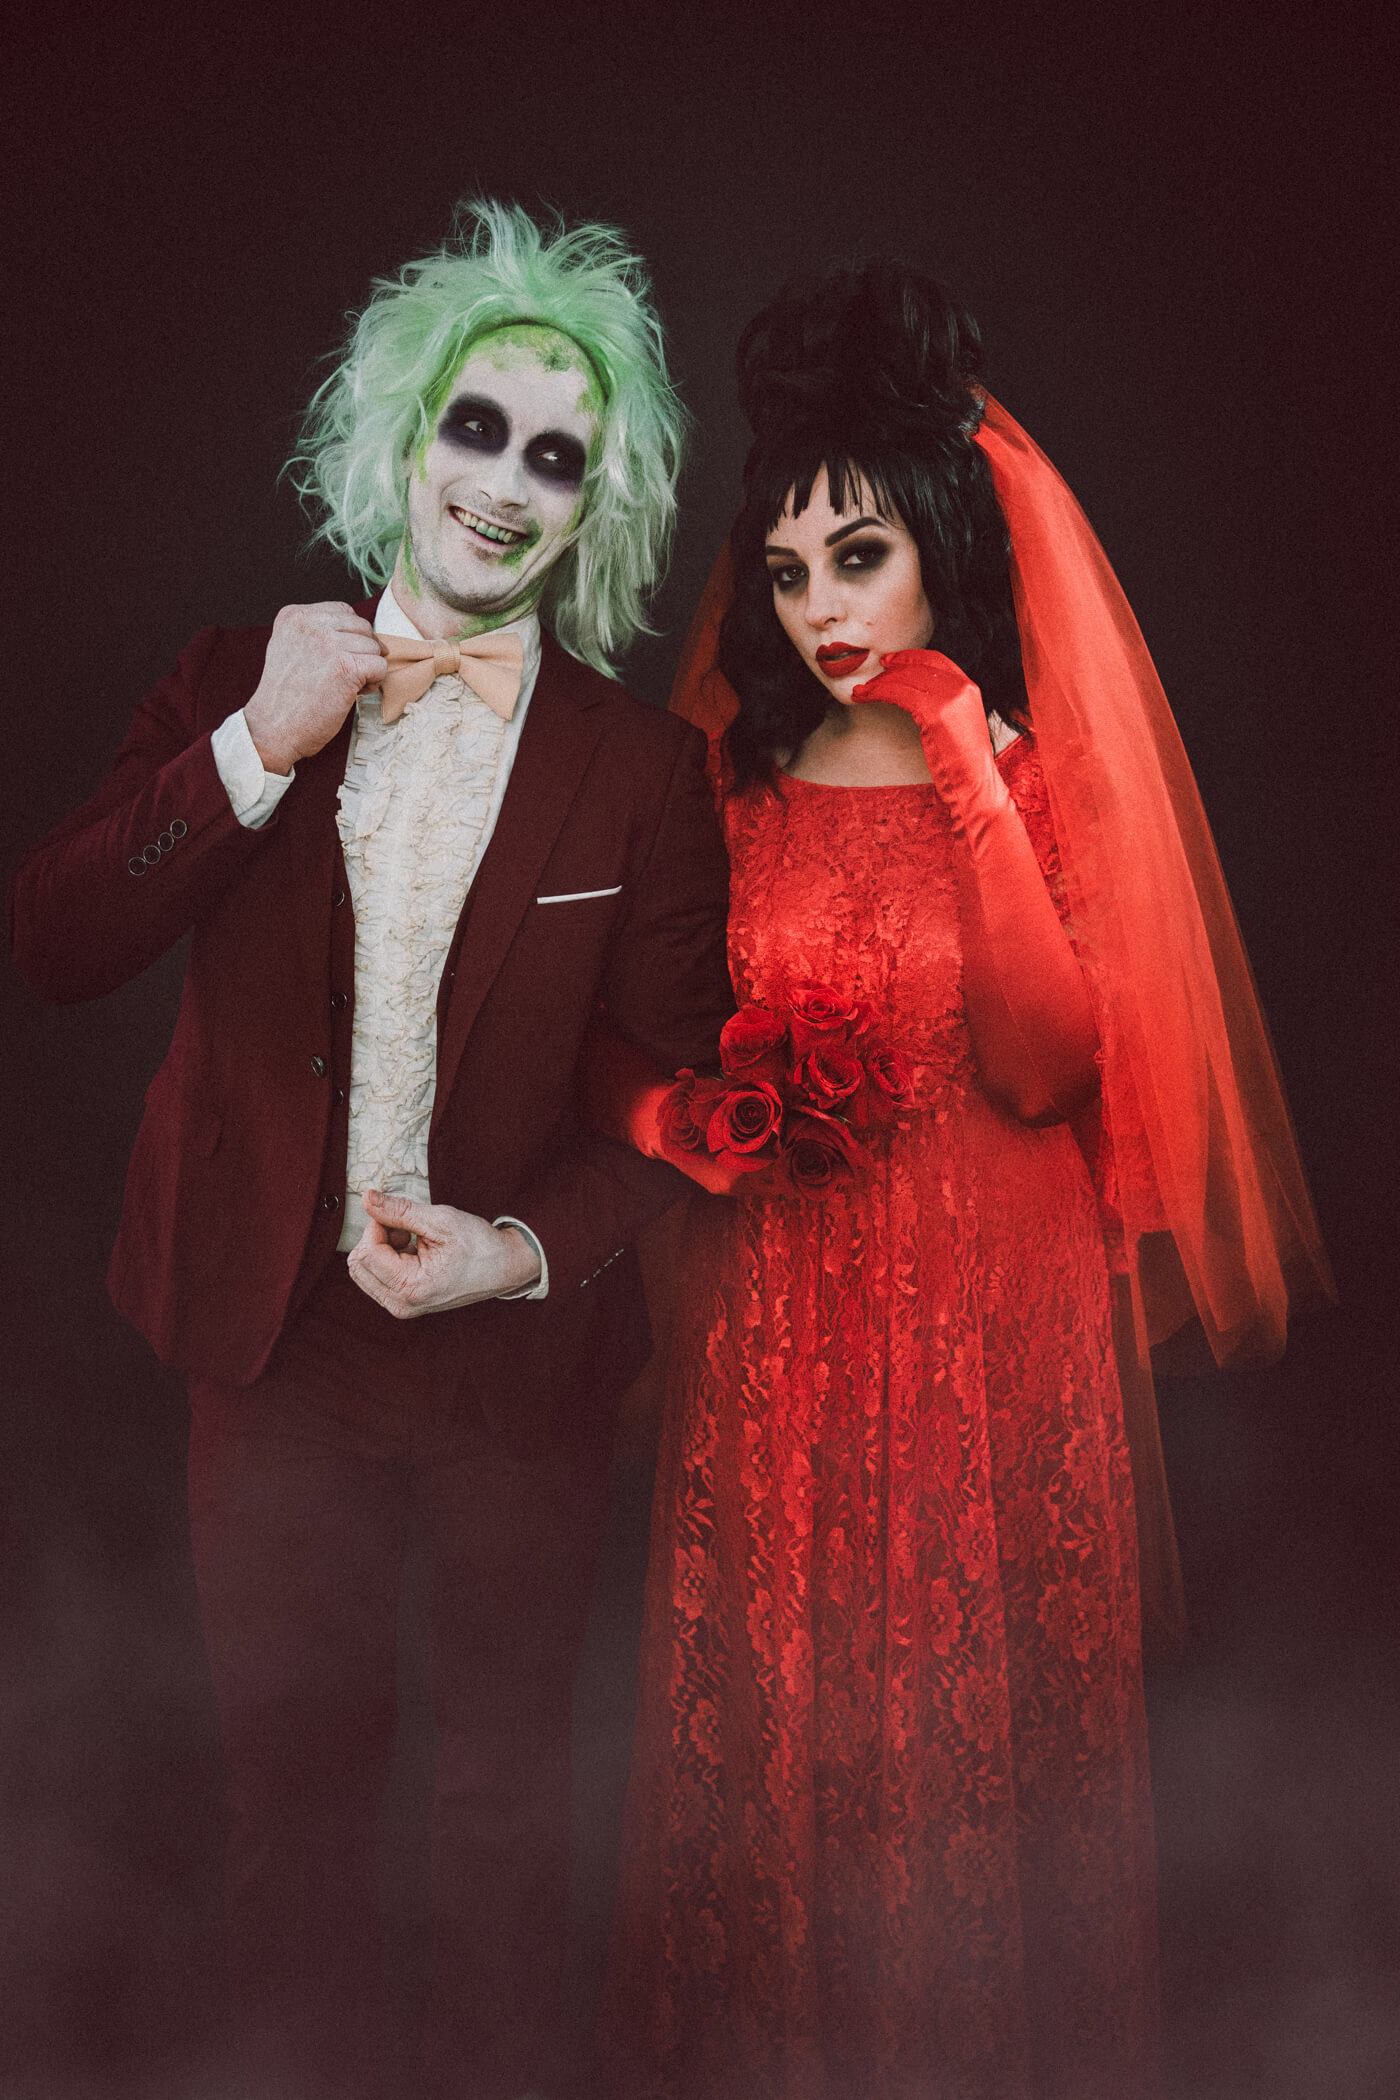 Halloween Couples Costume Idea: Beetlejuice and Lydia Deetz